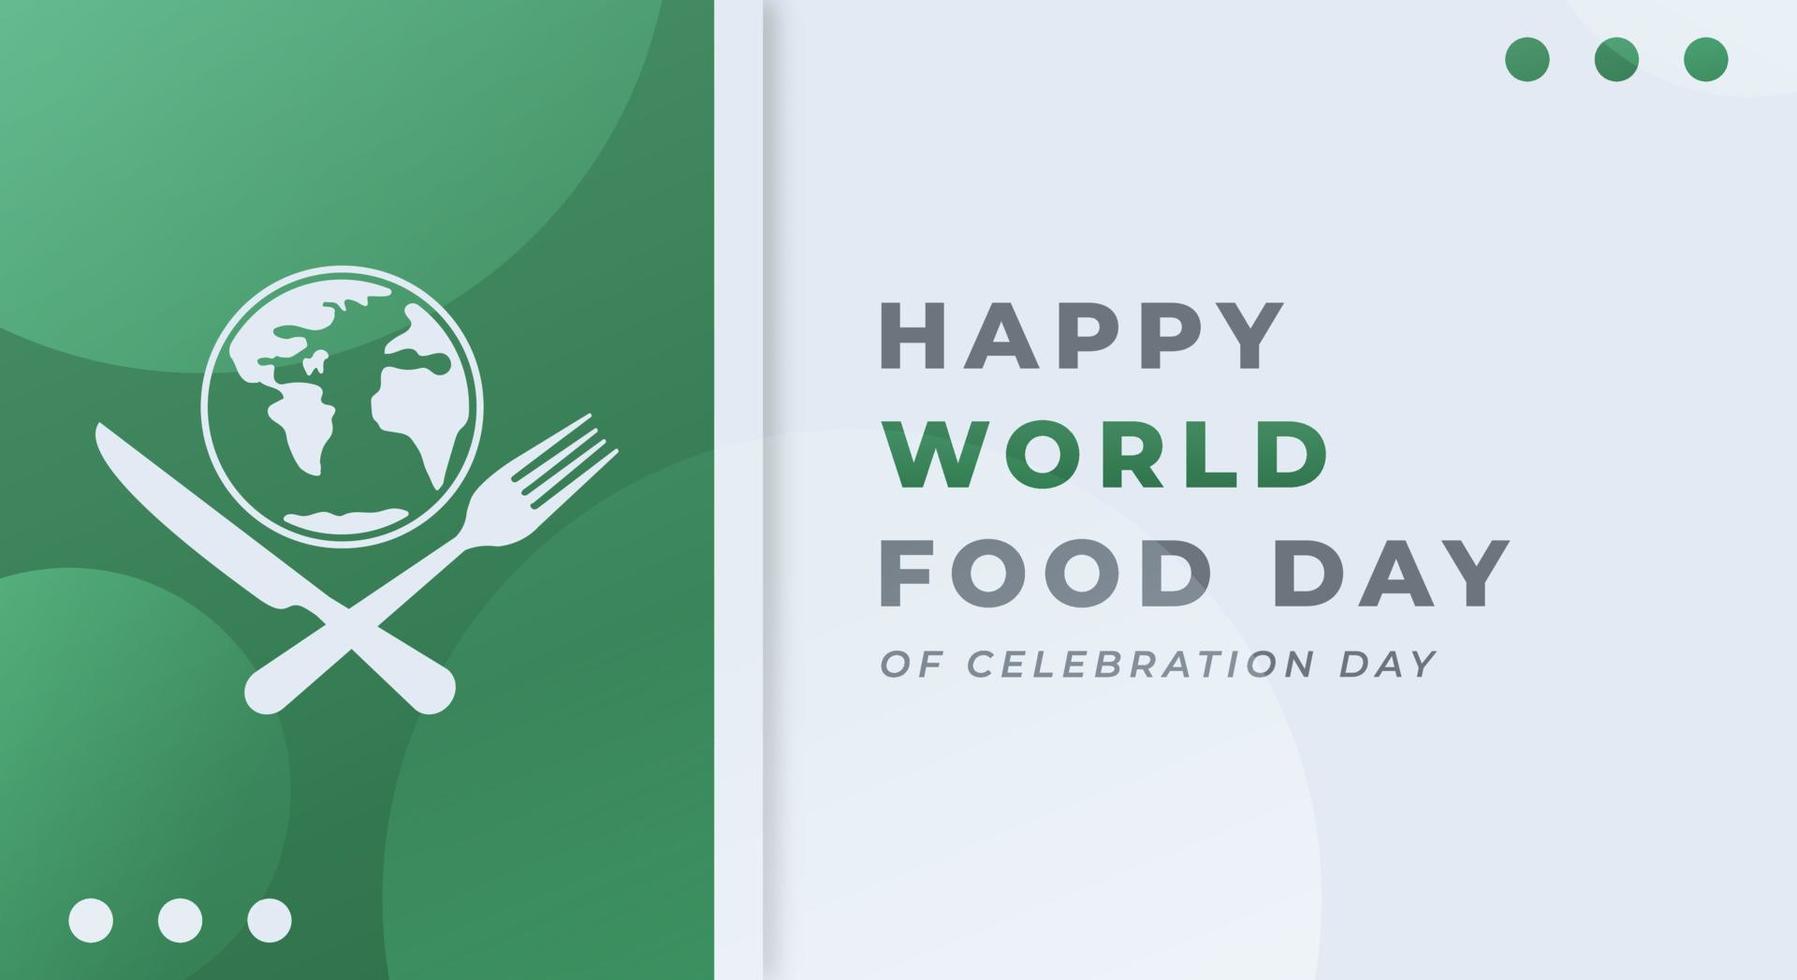 World Food Day Celebration Vector Design Illustration for Background, Poster, Banner, Advertising, Greeting Card